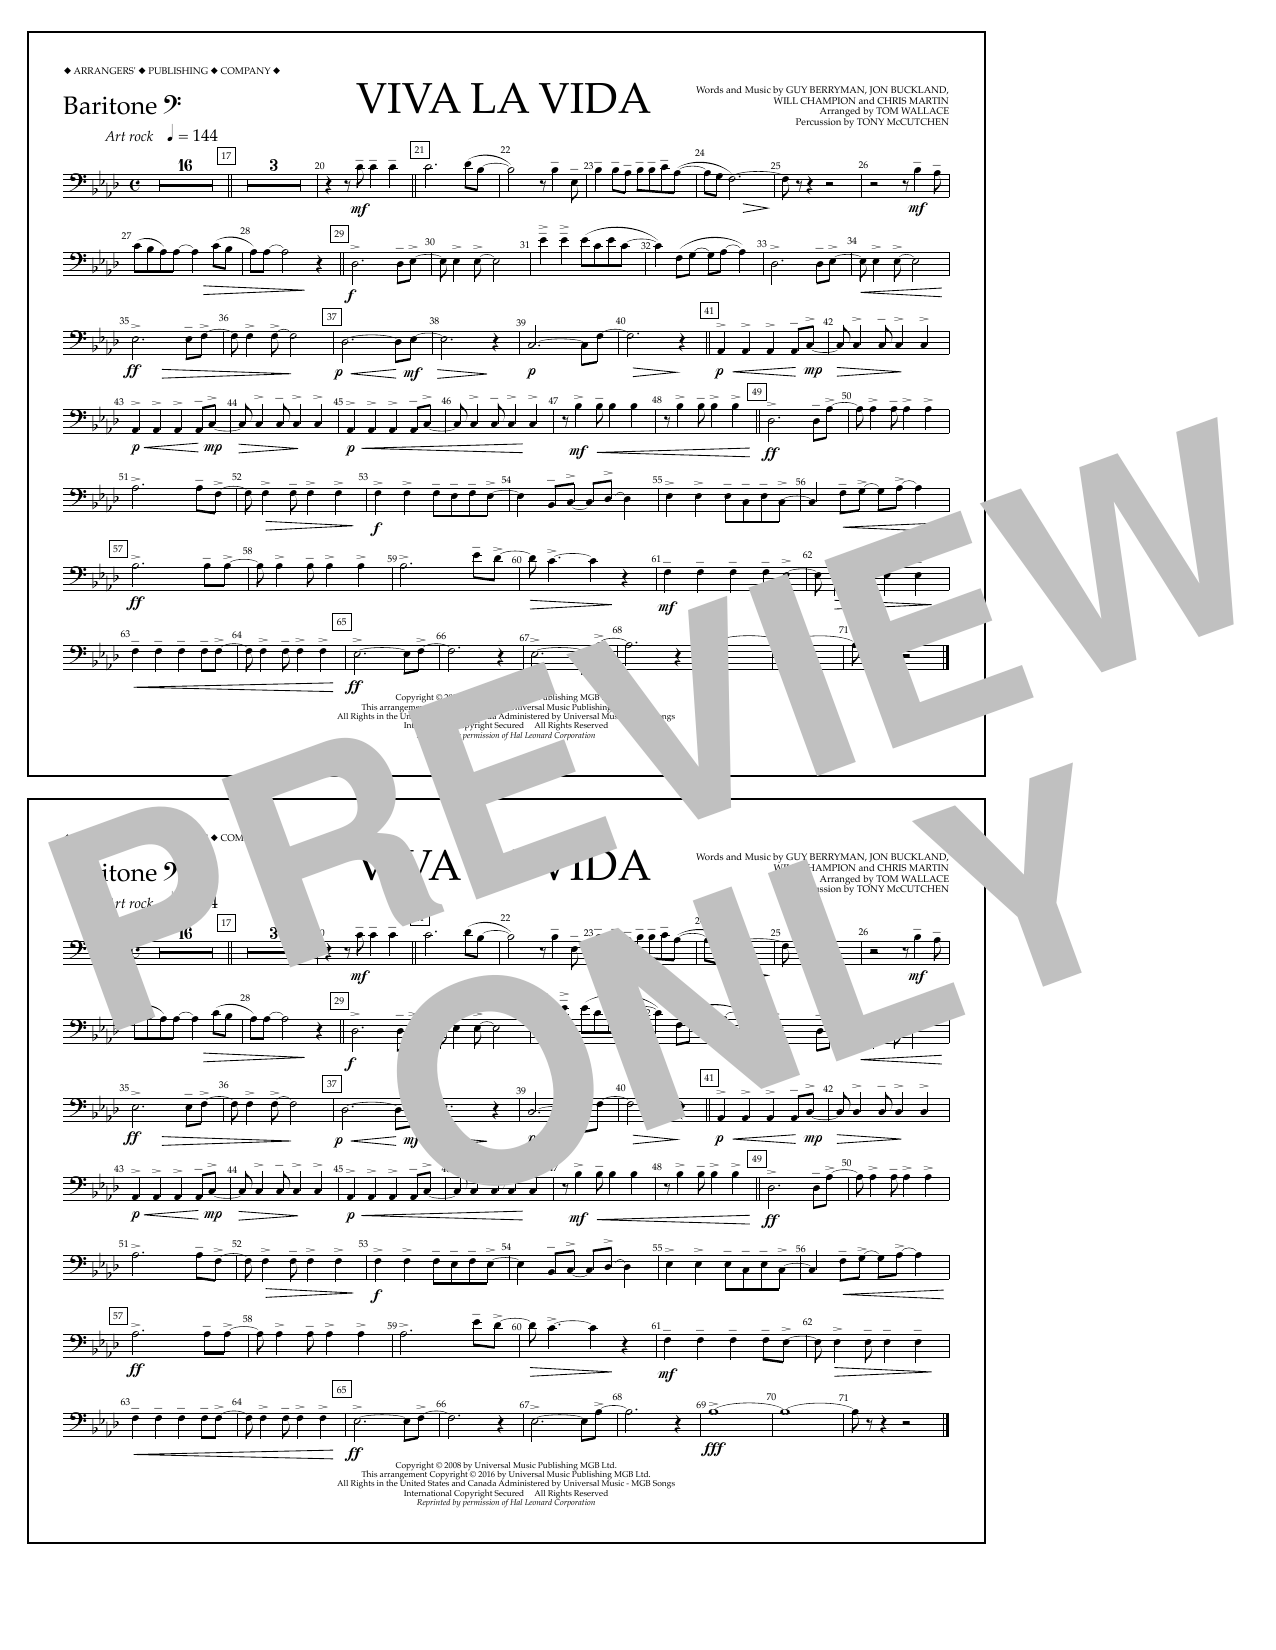 Tom Wallace Viva La Vida - Baritone B.C. Sheet Music Notes & Chords for Marching Band - Download or Print PDF